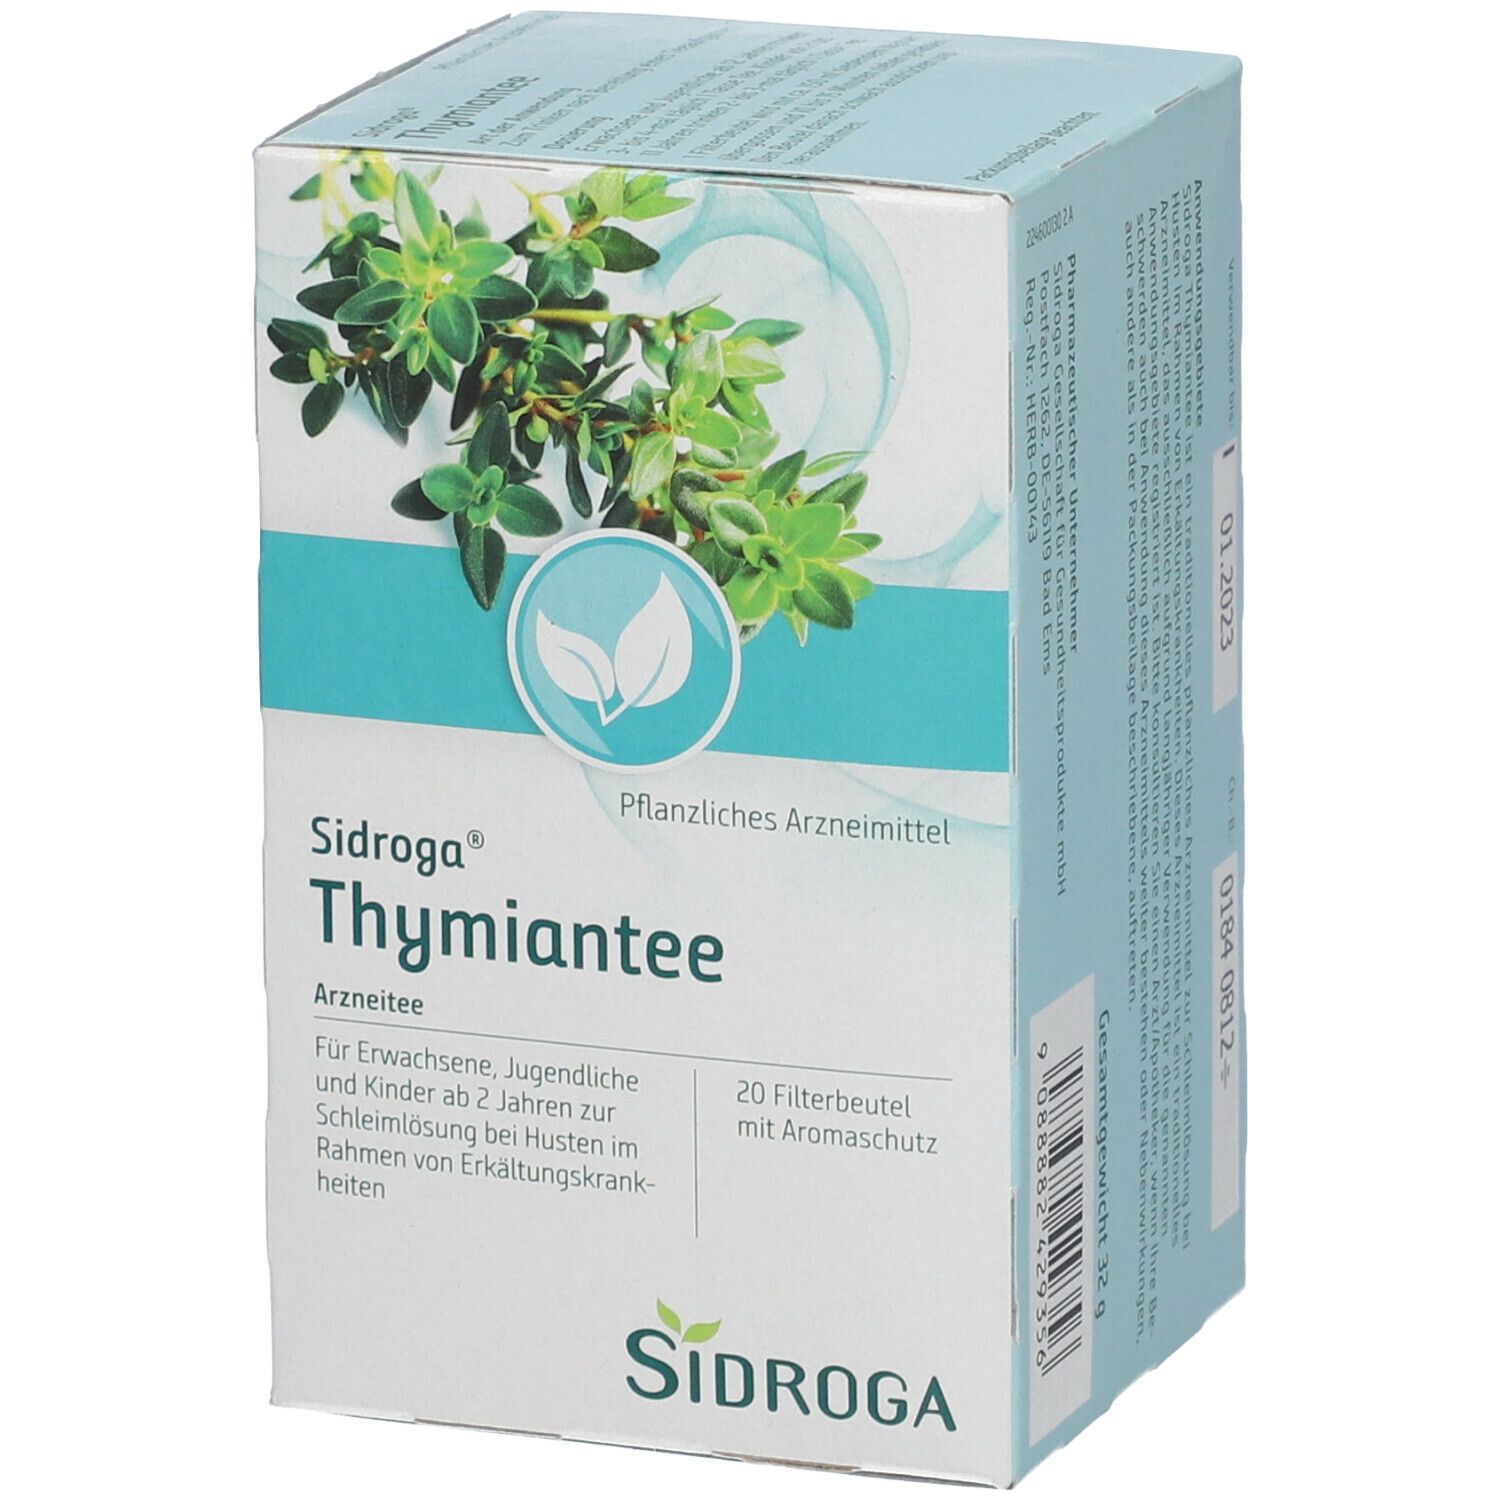 Sidroga® Thymiantee